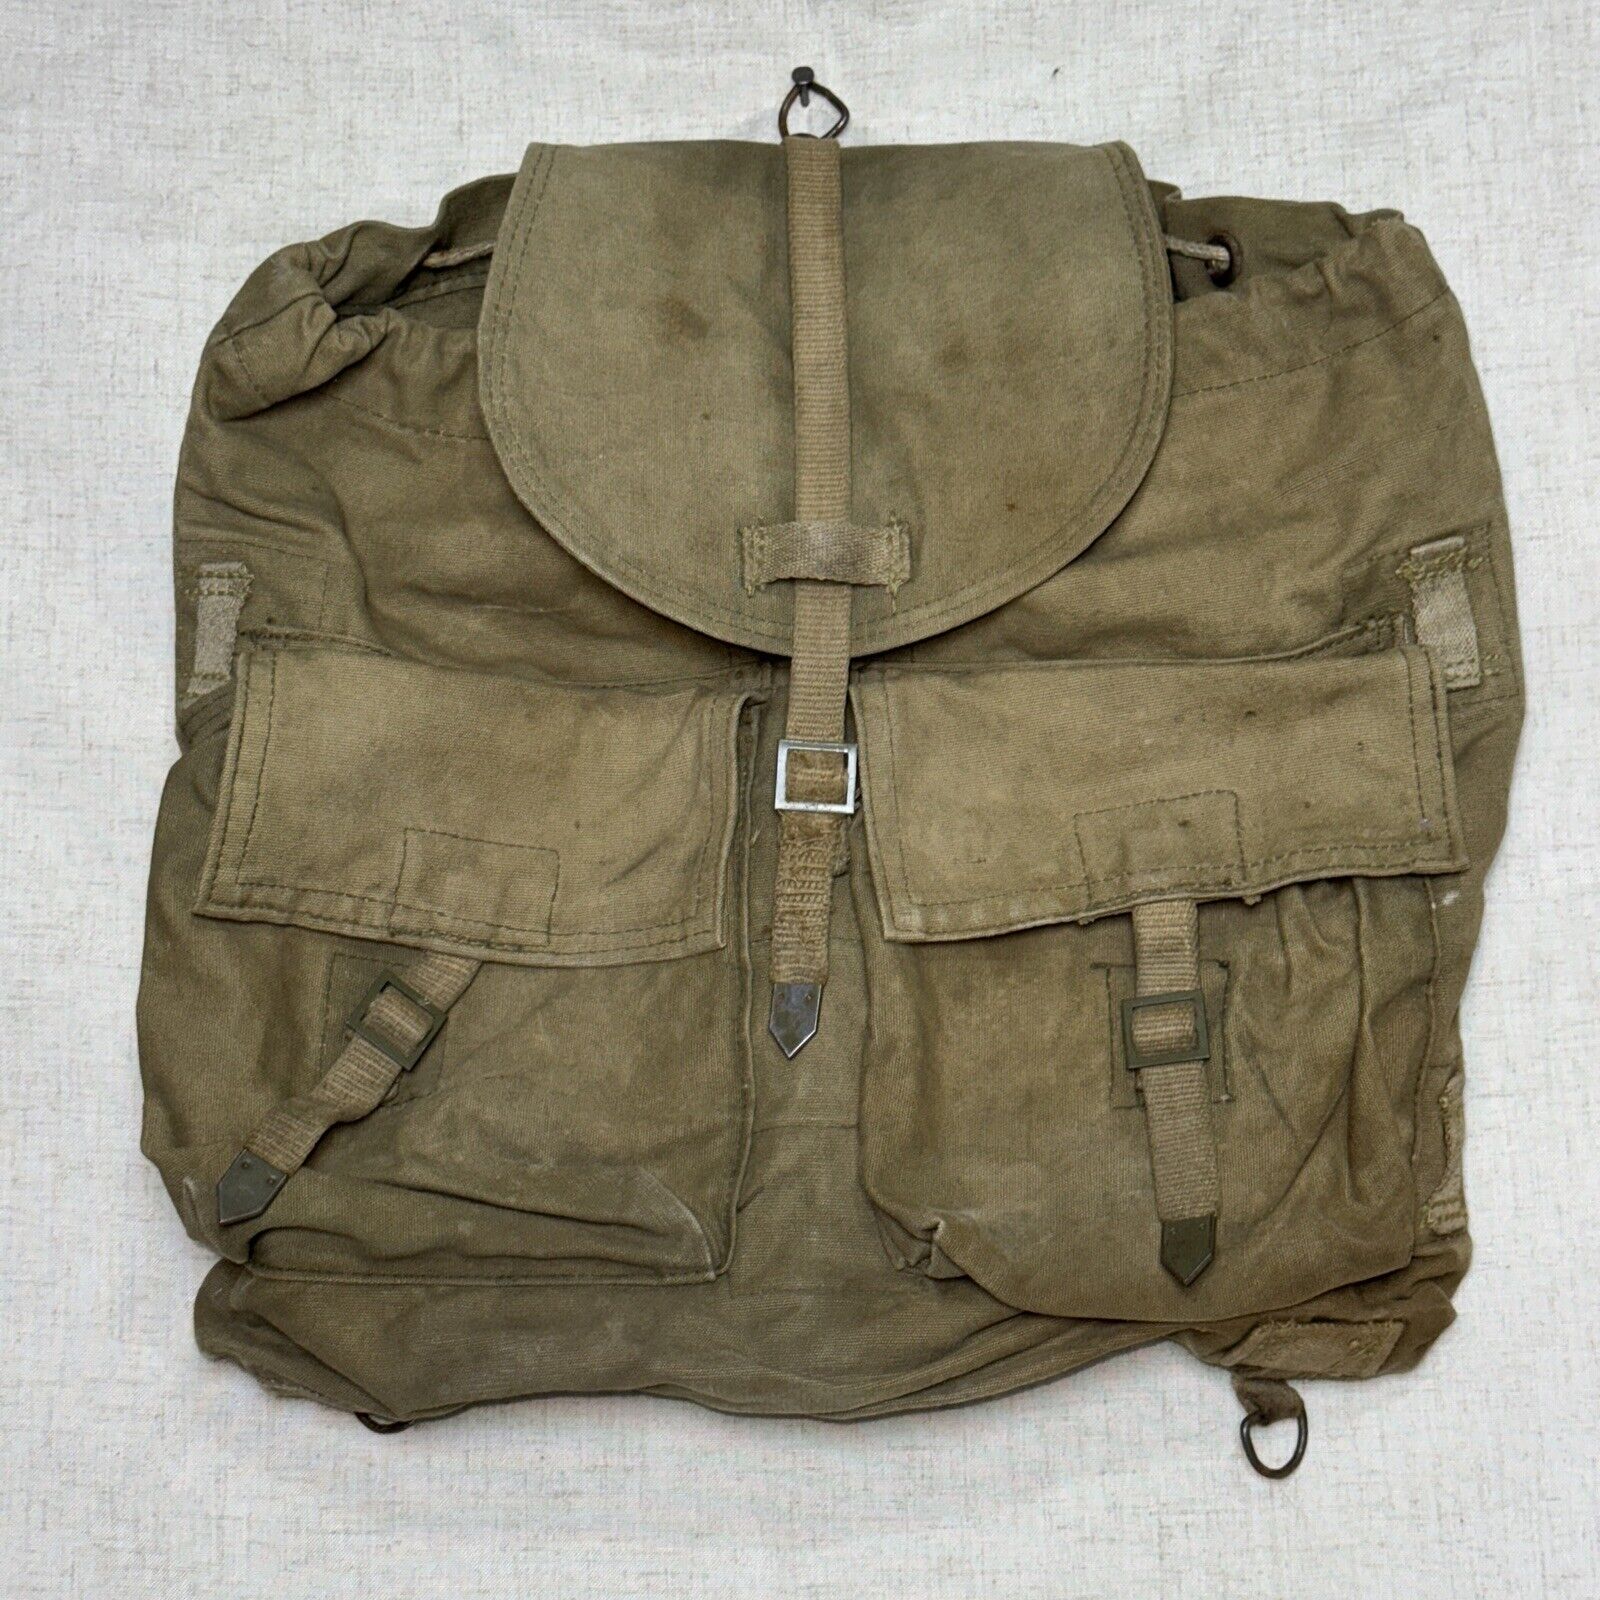 Original Czech army vintage rucksack M60 no straps bushcraft hiking Camping